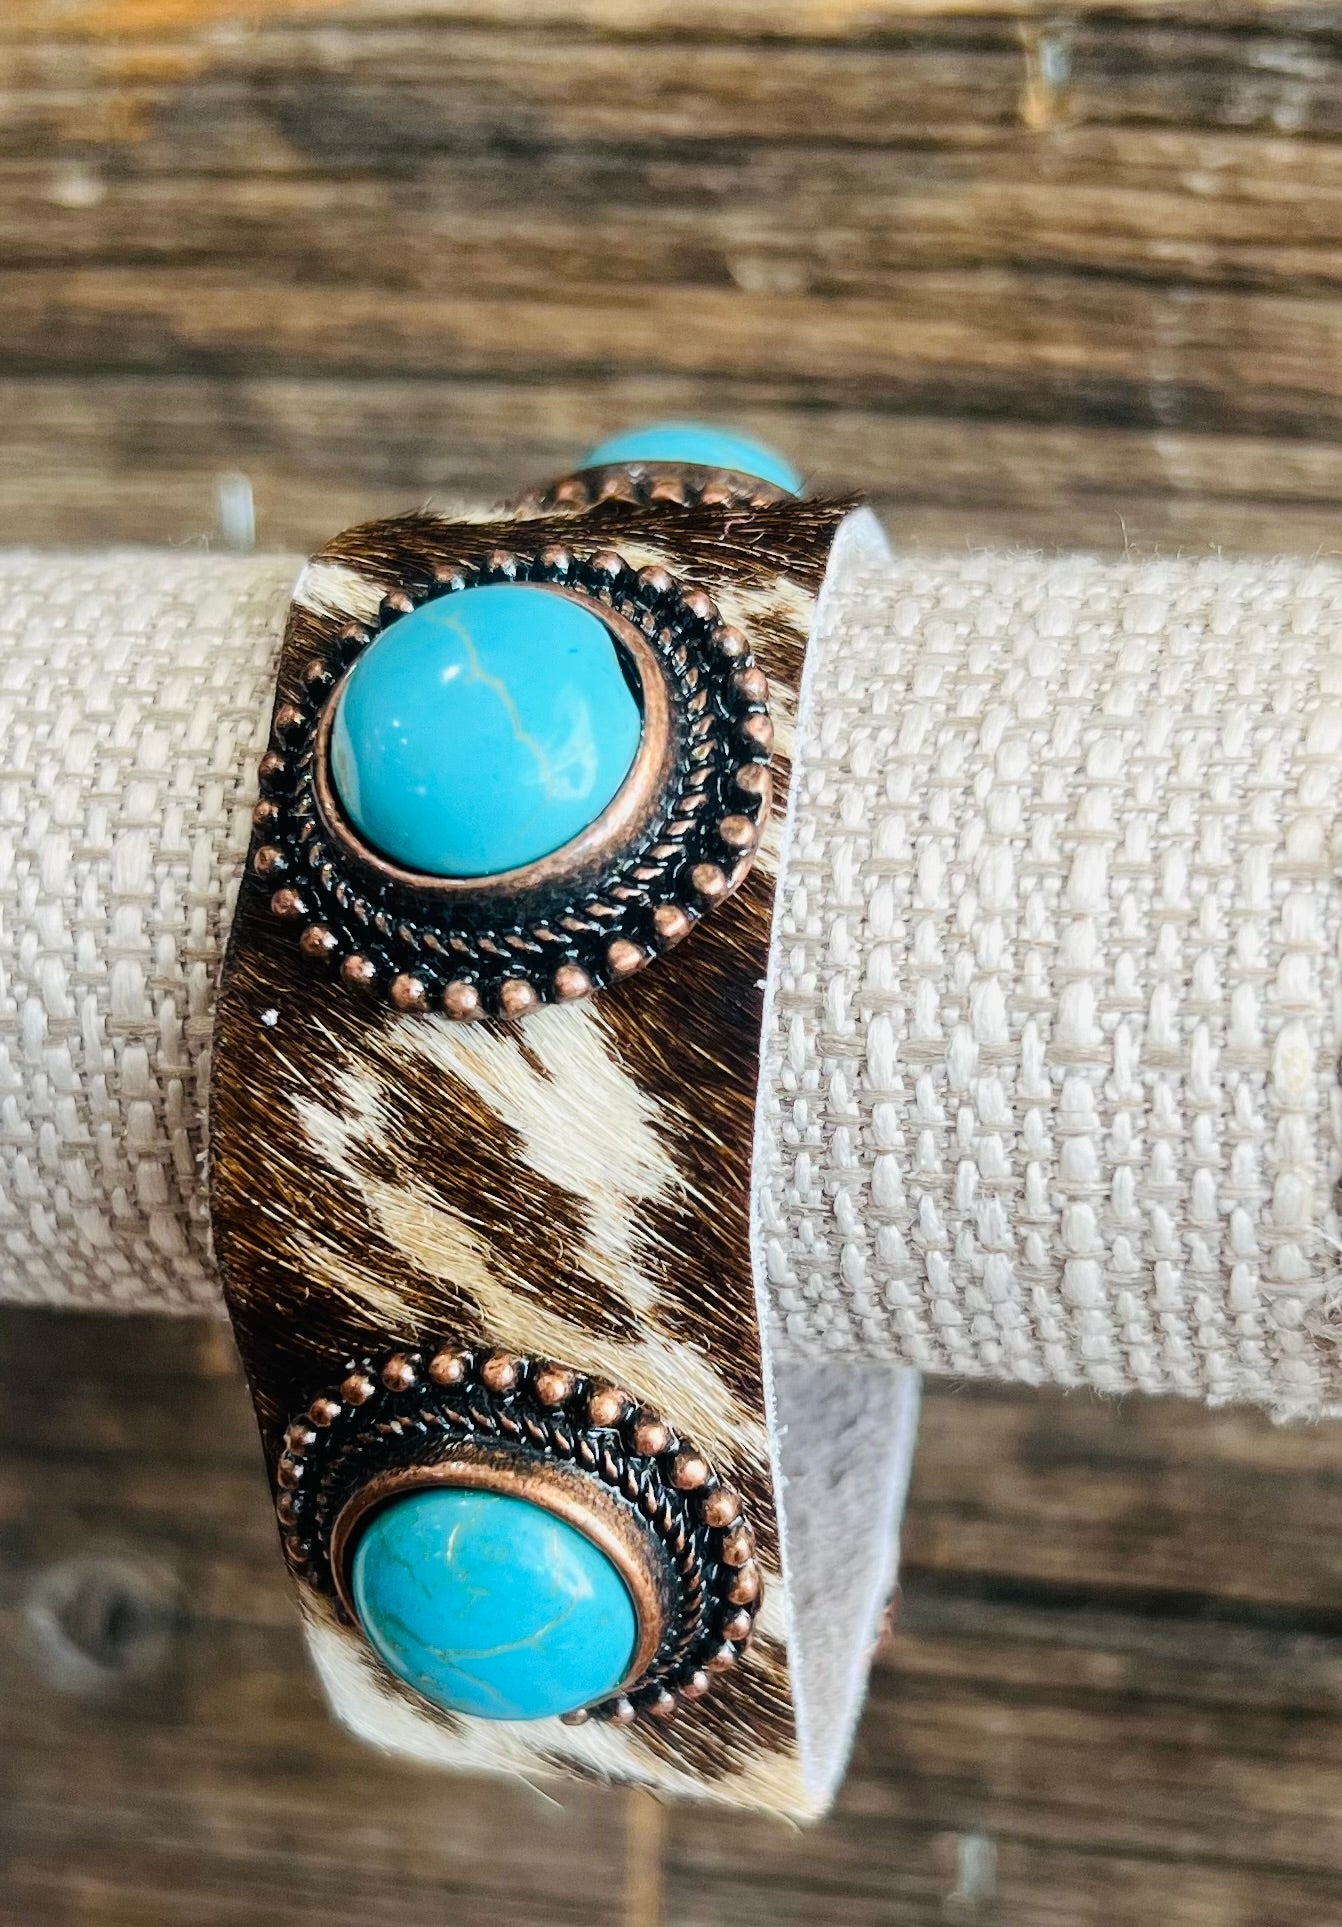 Cowhide Bracelet & turquoise stones